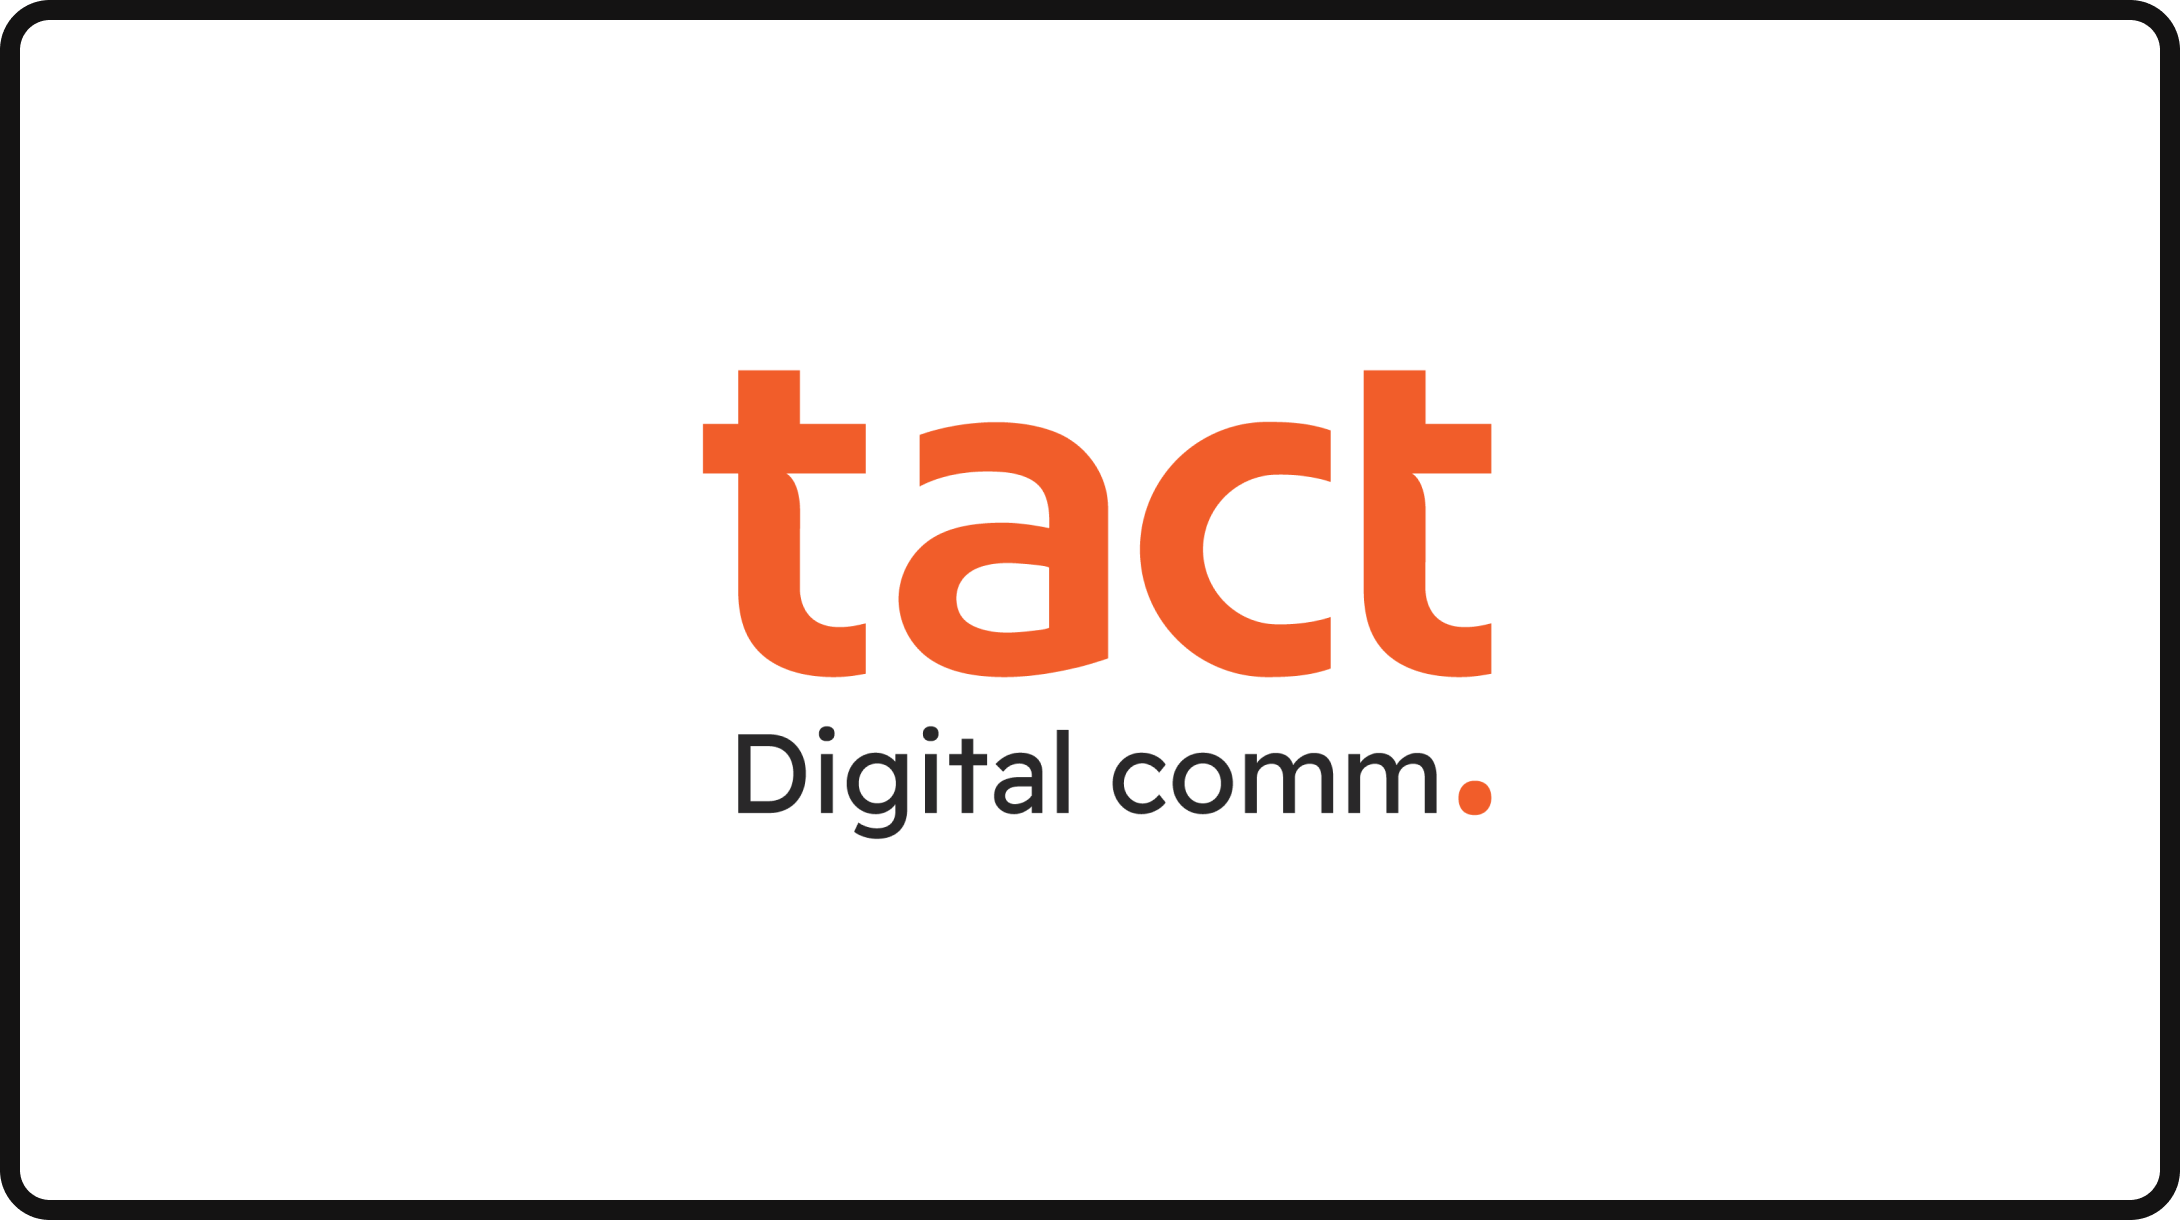 Tact digital communication